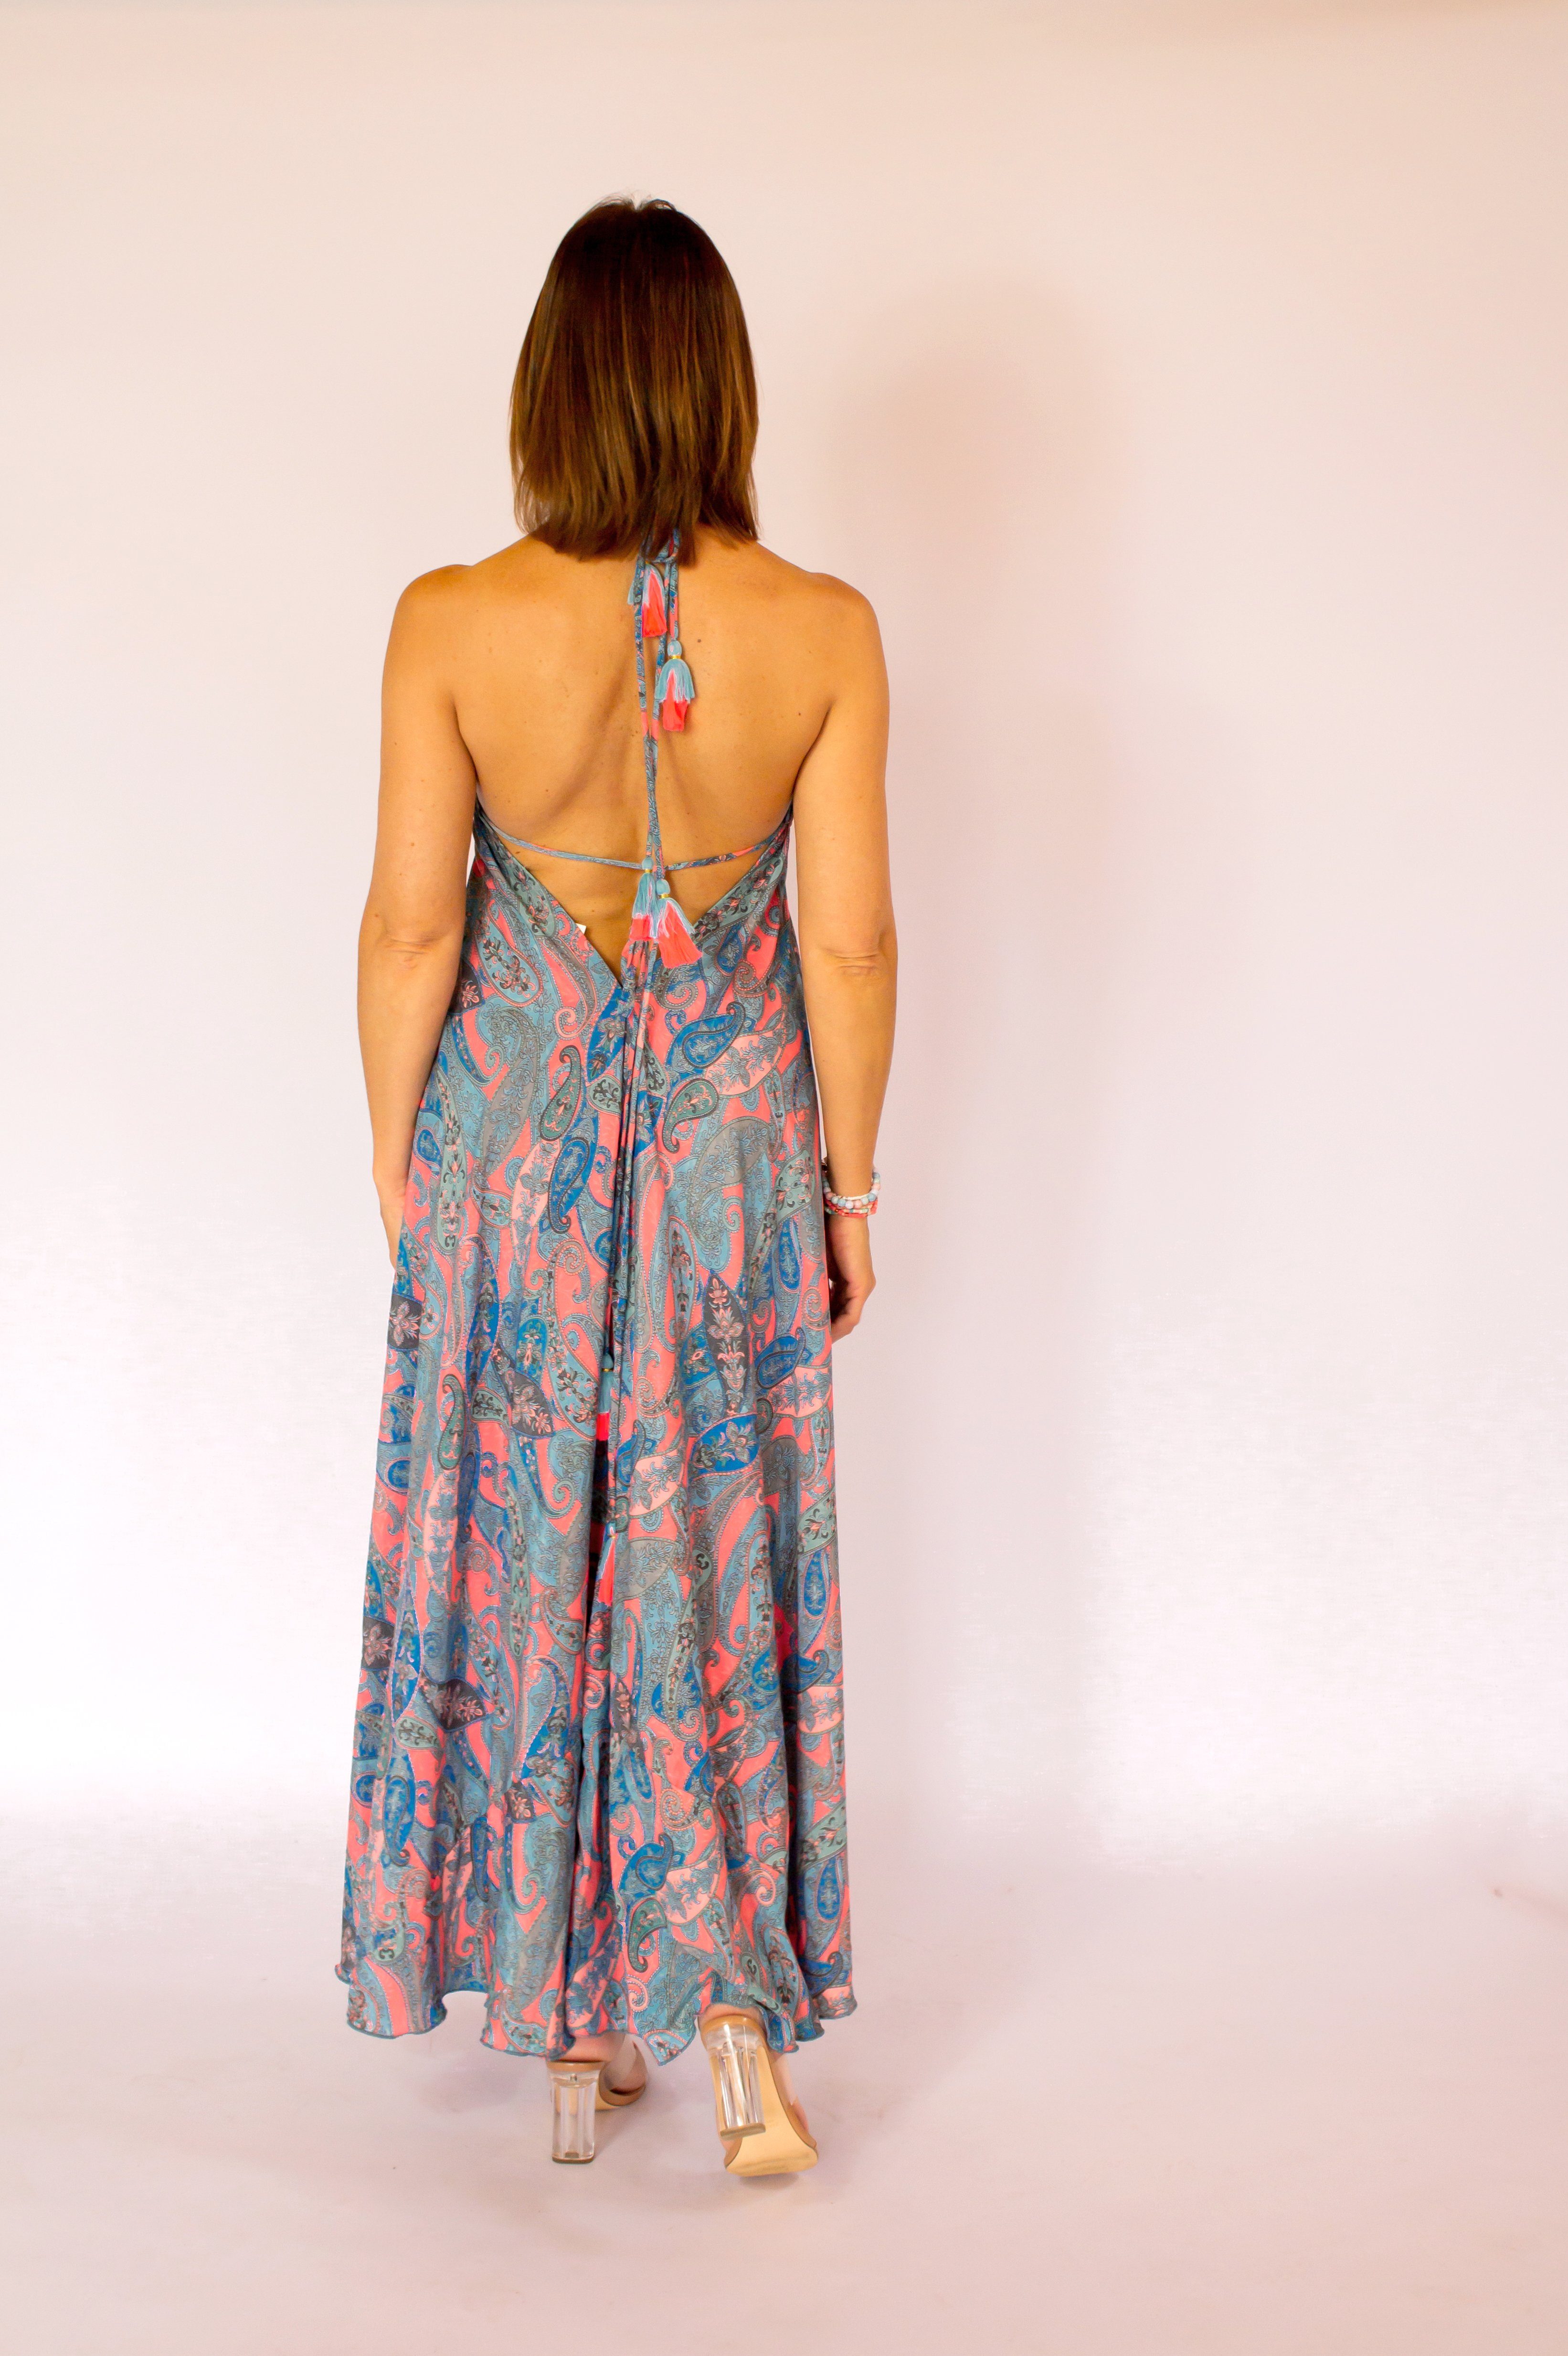 MonCaprise Sommerkleid One Mehrfarbig Rückenausschnitt Clothè by Strandkleid Boho, mit Seidenmix Maxikleid Size tiefem